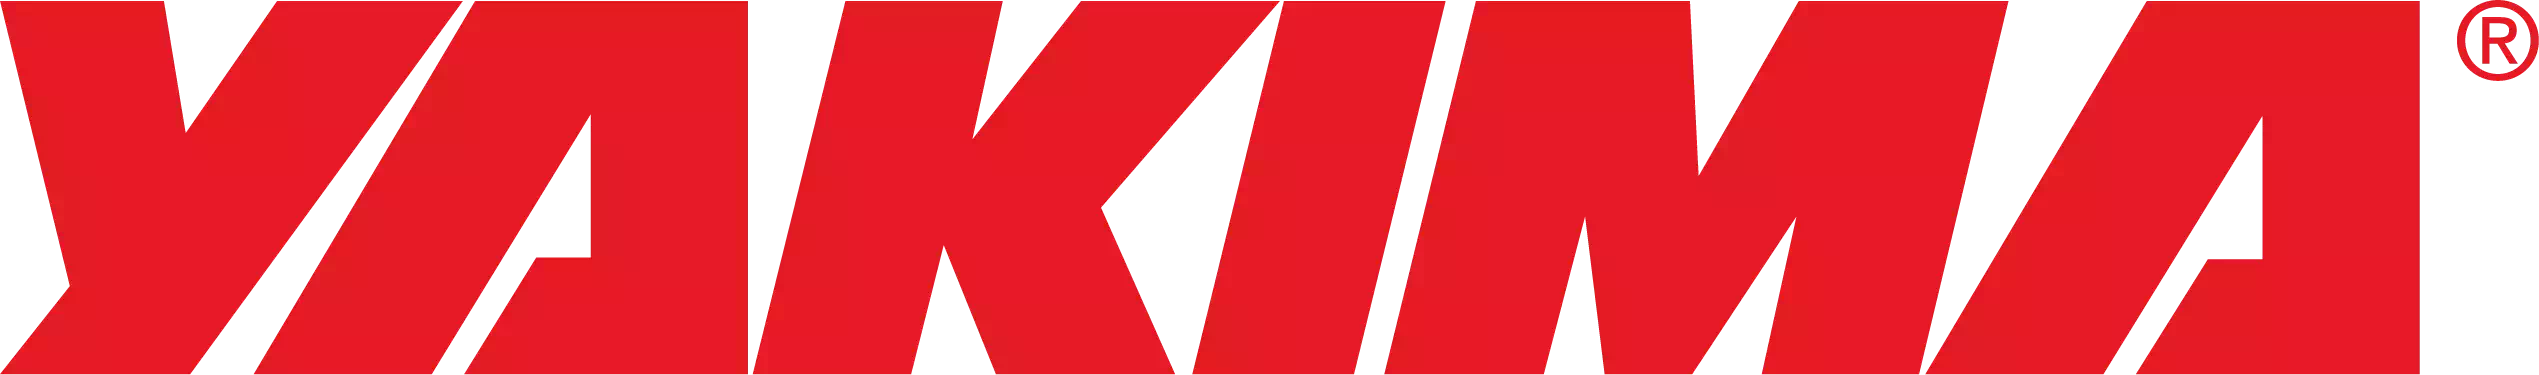 Yakima Brand Logo